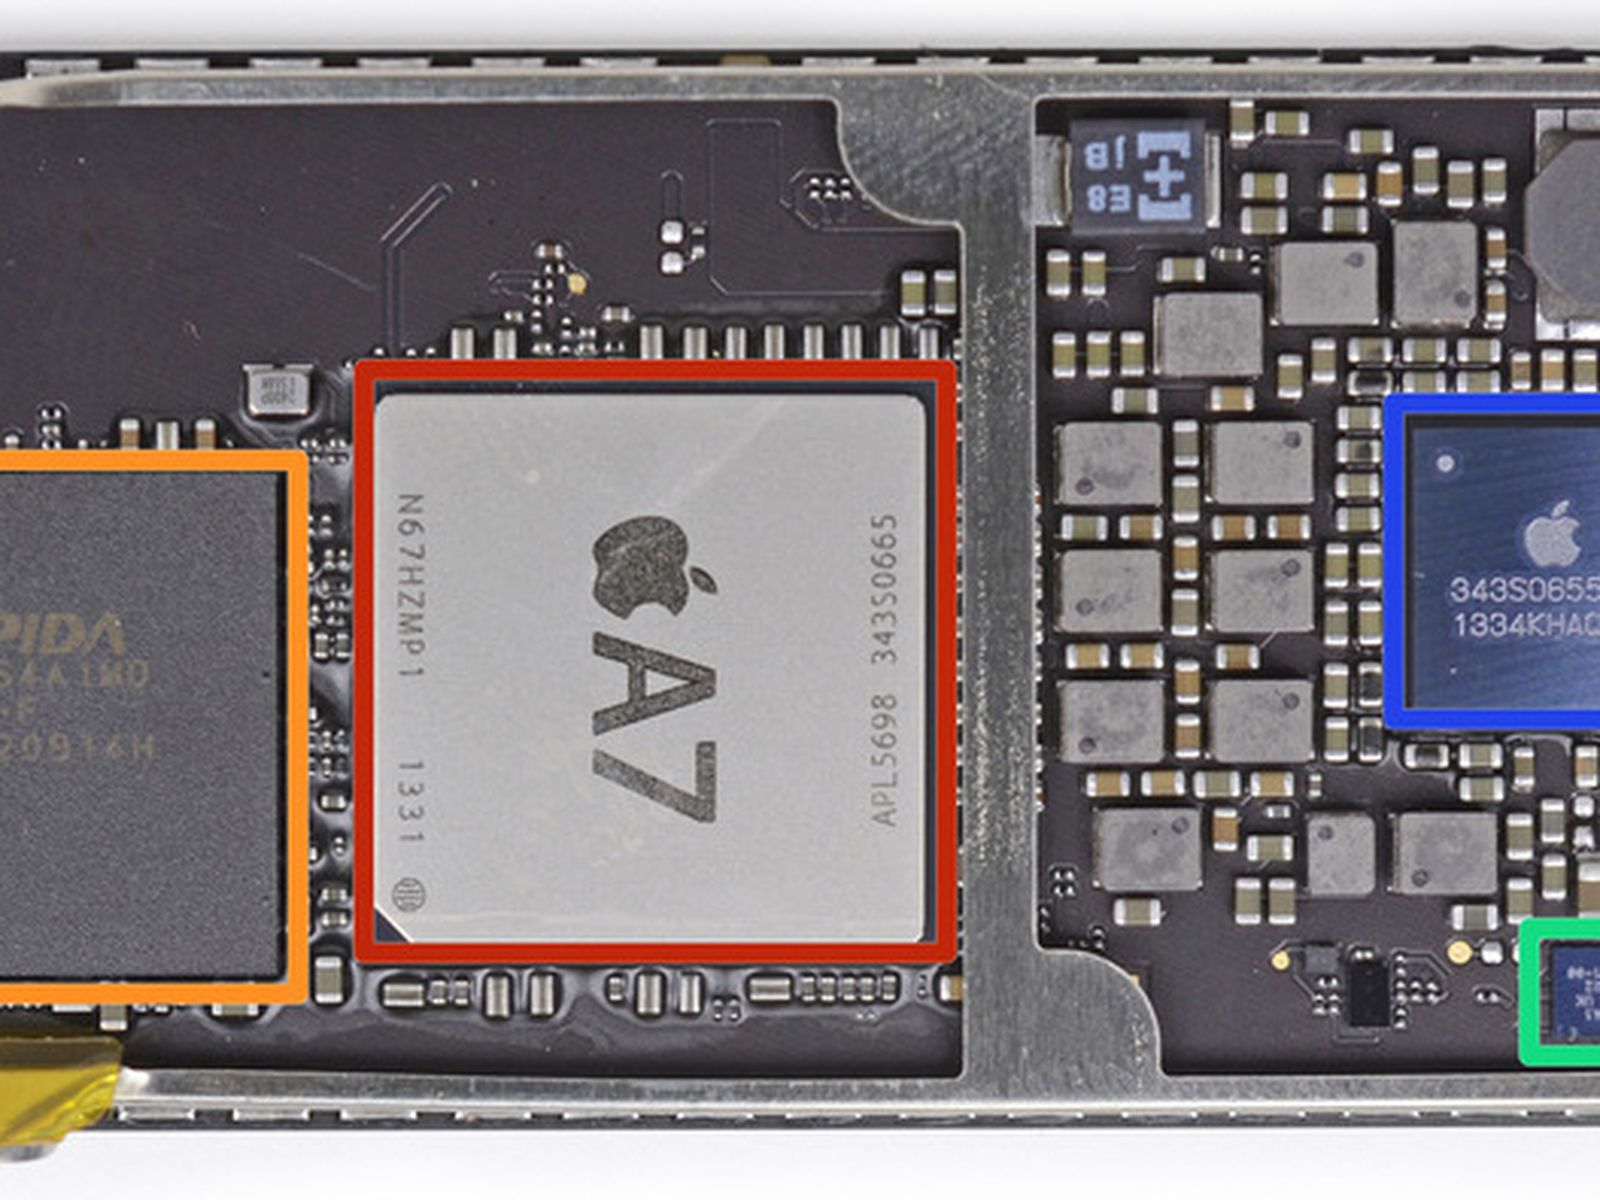 Teardown of iPad Air Reveals A7 Chip, LG Display, Qualcomm LTE Modem -  MacRumors